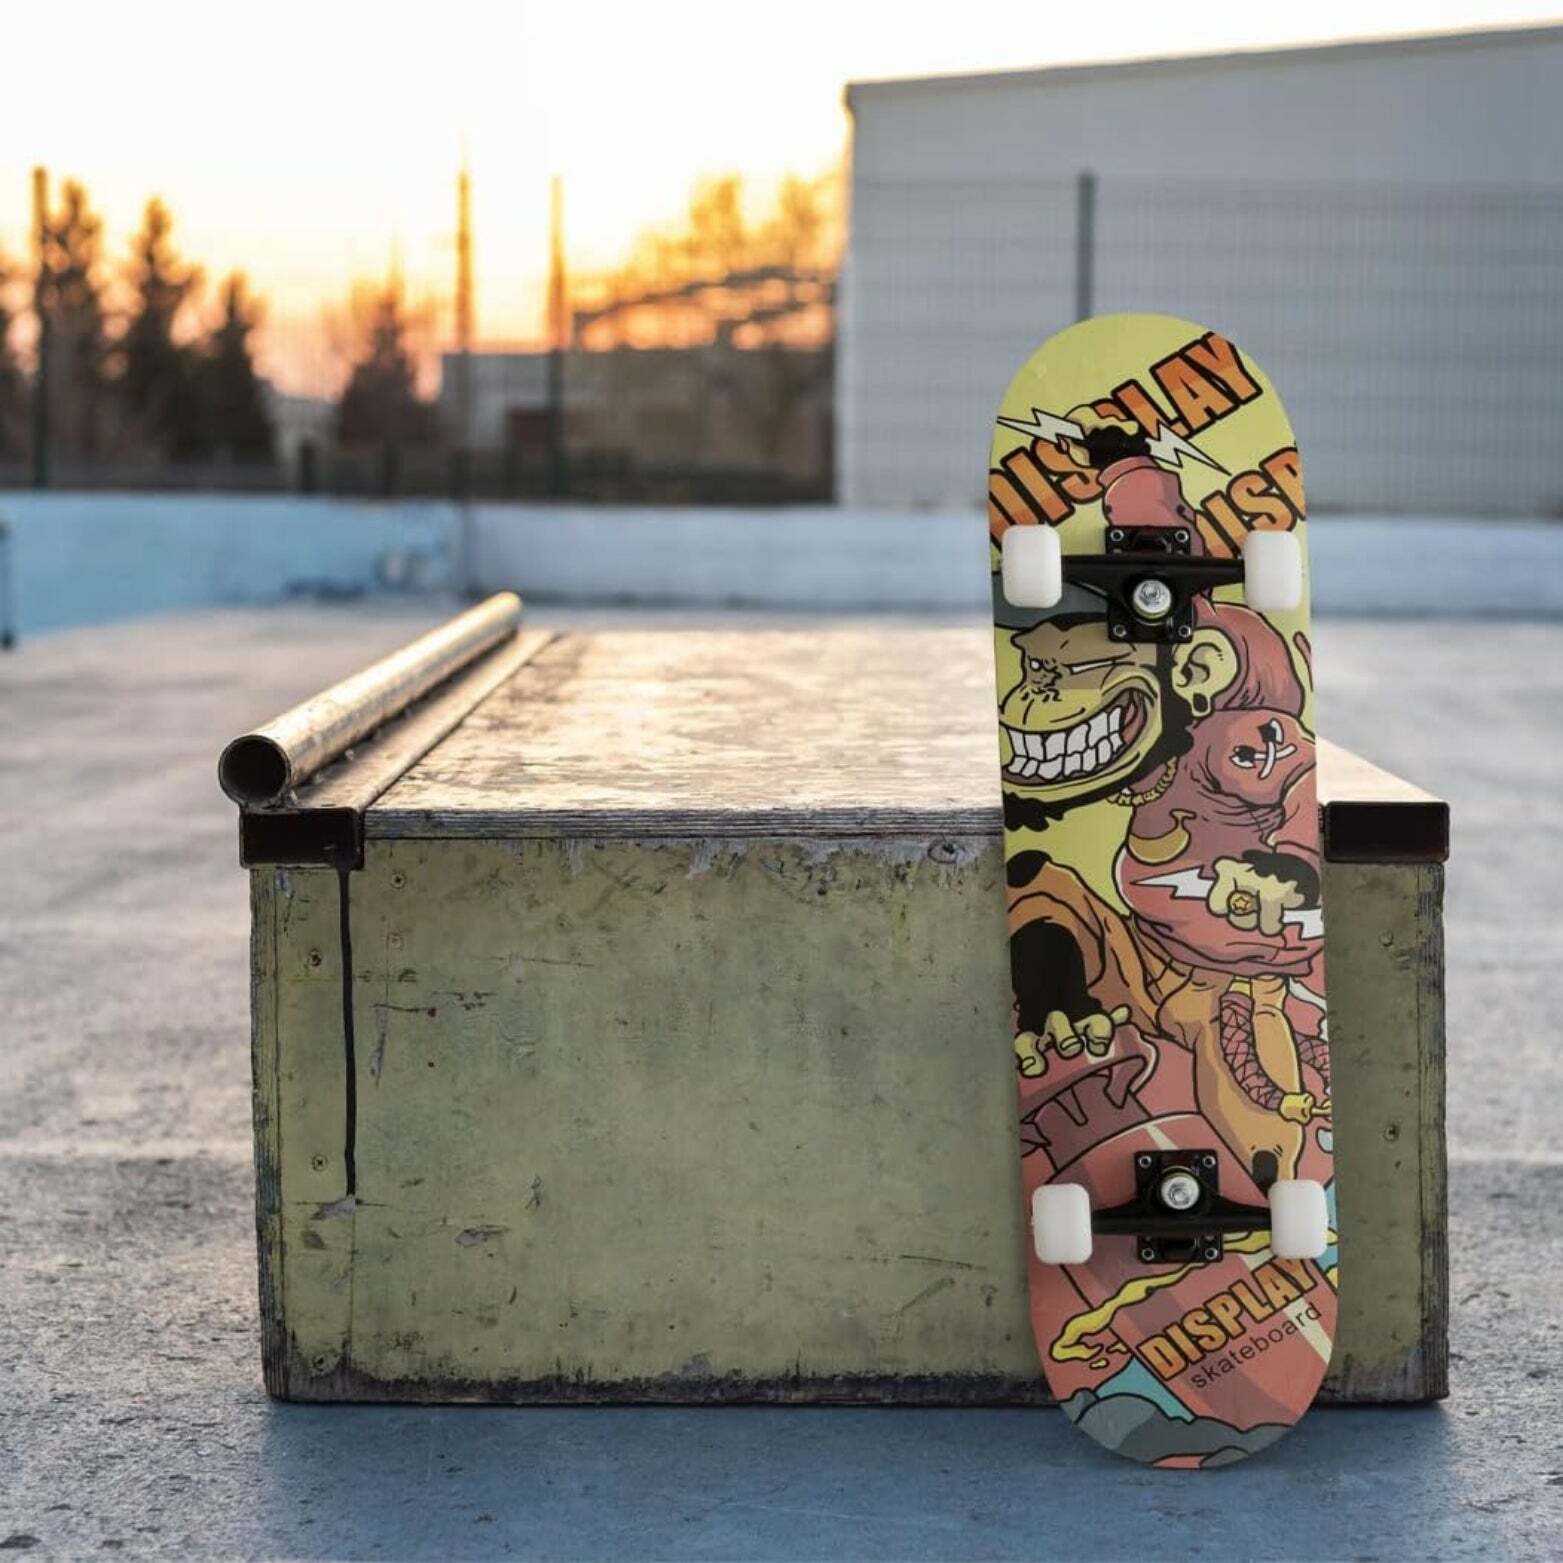 ROFFT Complete Skateboard - 31